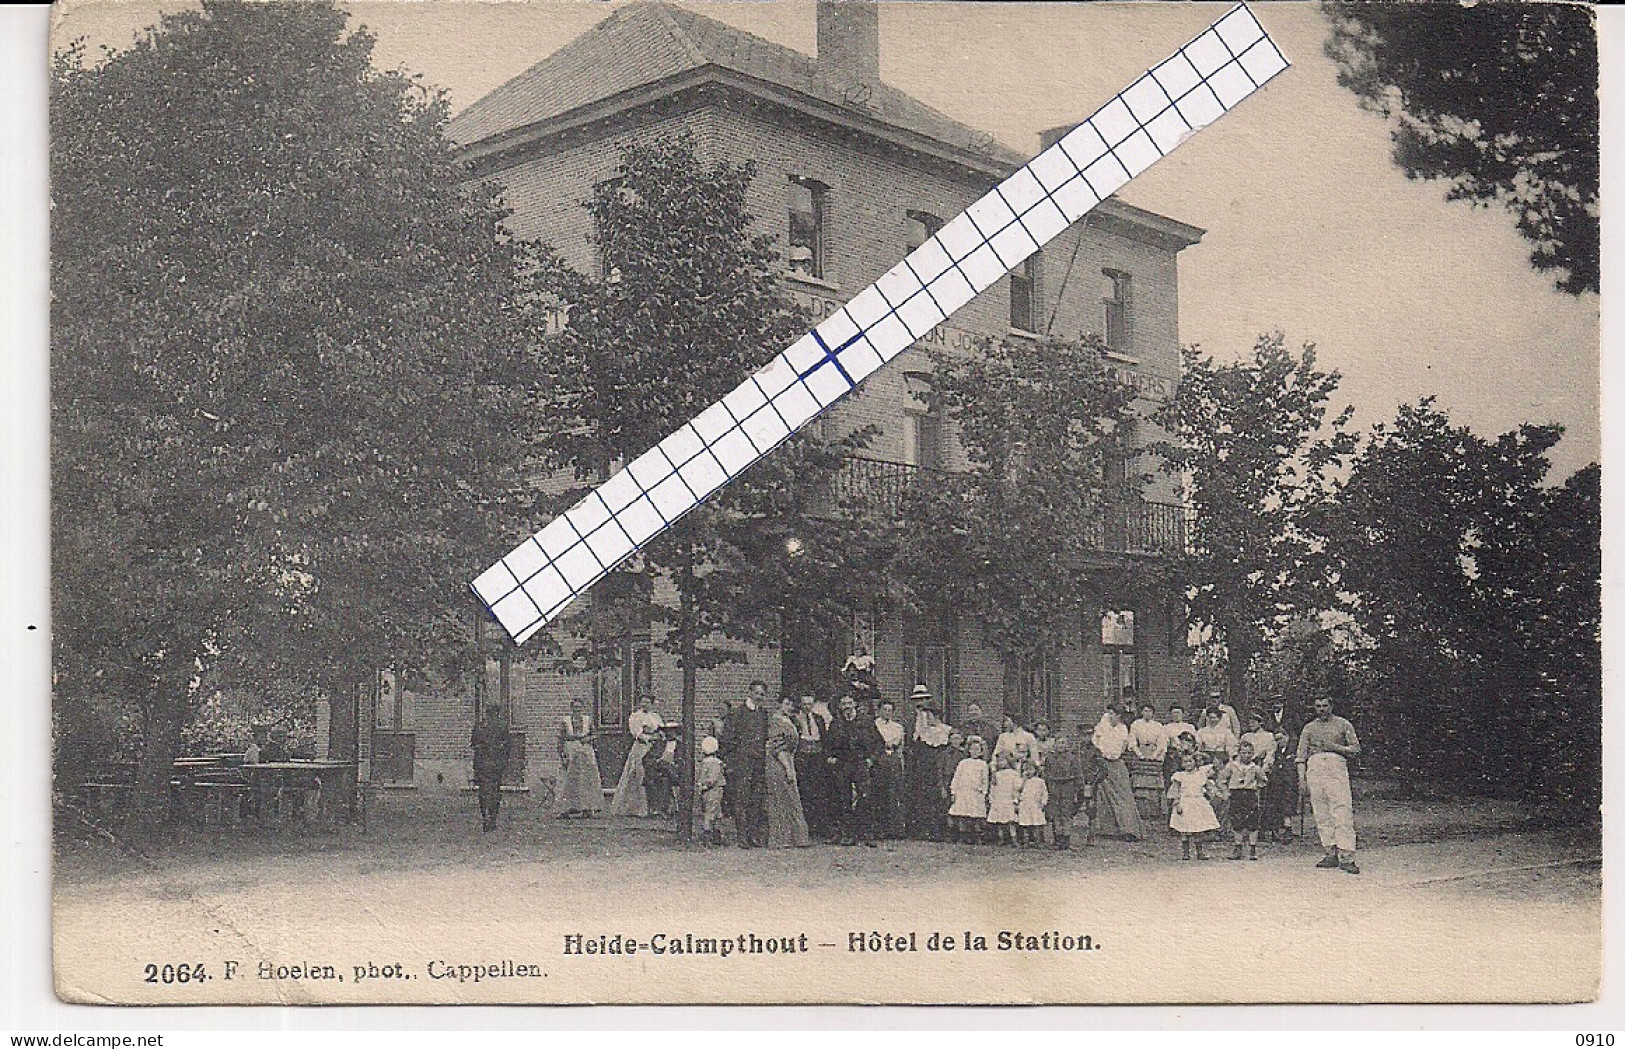 HEIDE-CALMPTHOUT-KALMTHOUT"HOTEL DE LA STATION"HOELEN 2064 UITGIFTE 11.09.1906 TYPE 4  - Kalmthout